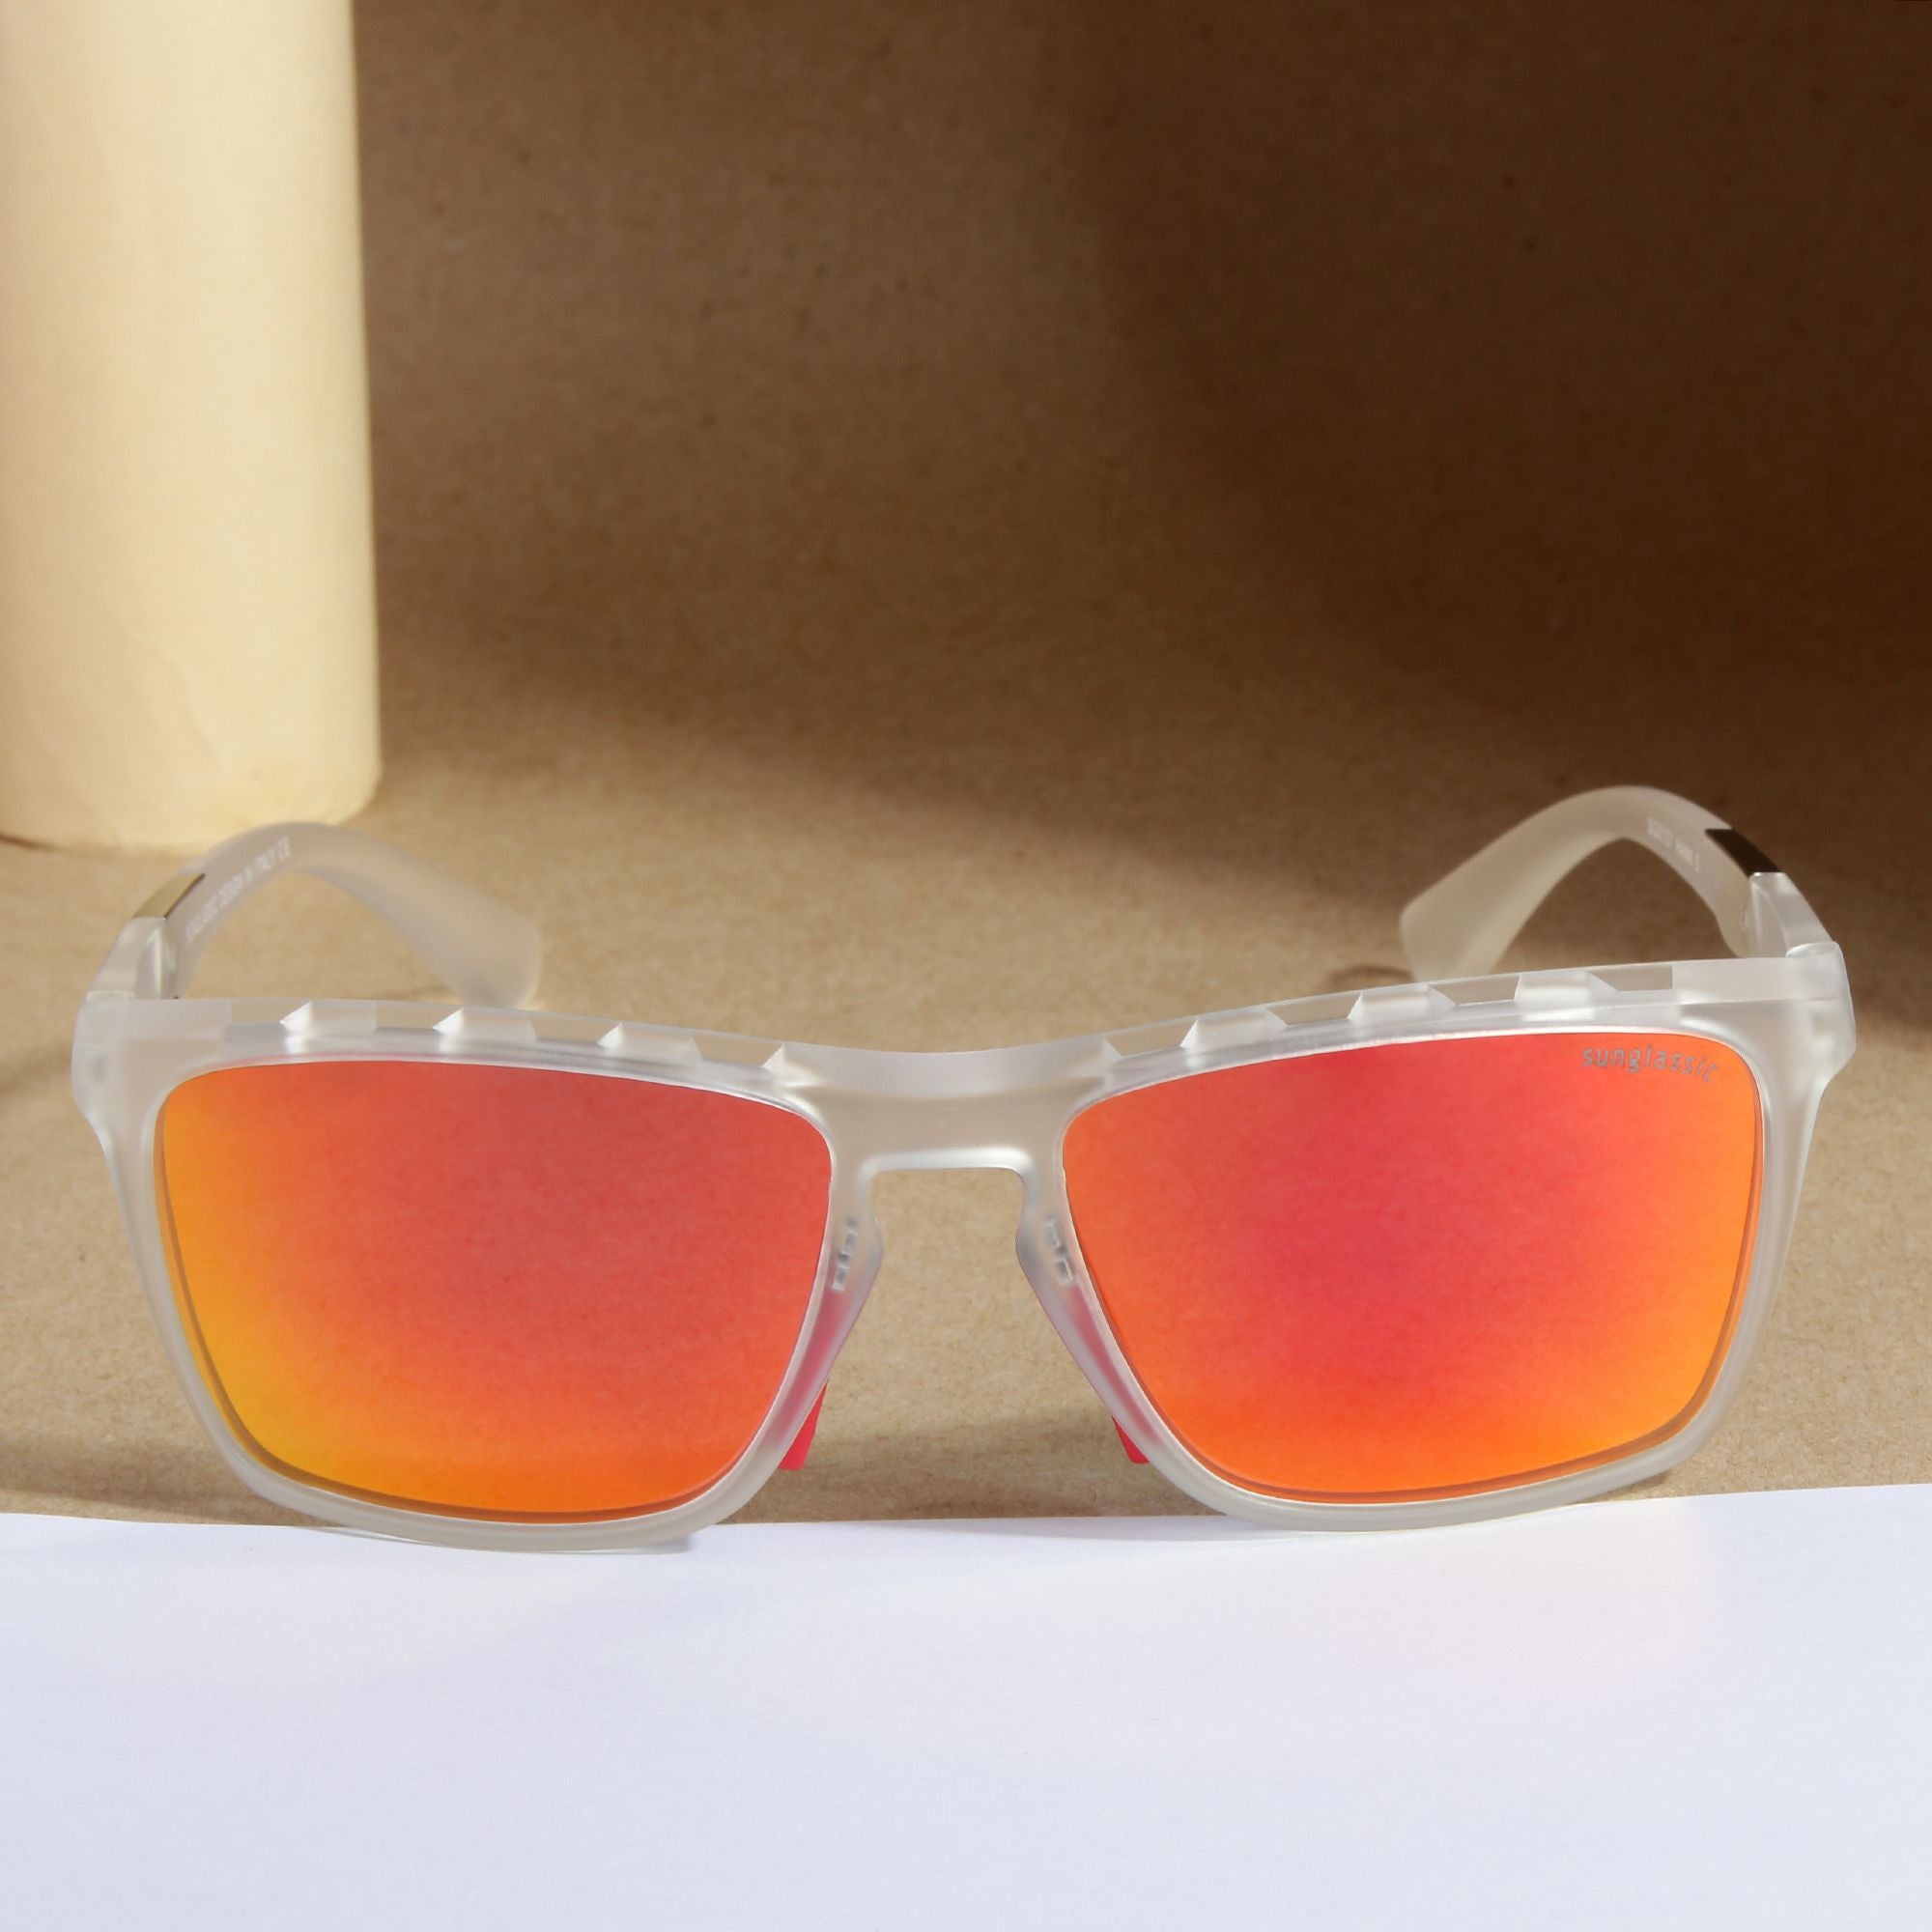 Hawk Clear Orange Mercury Polarized Rectangle TR90 Sunglasses